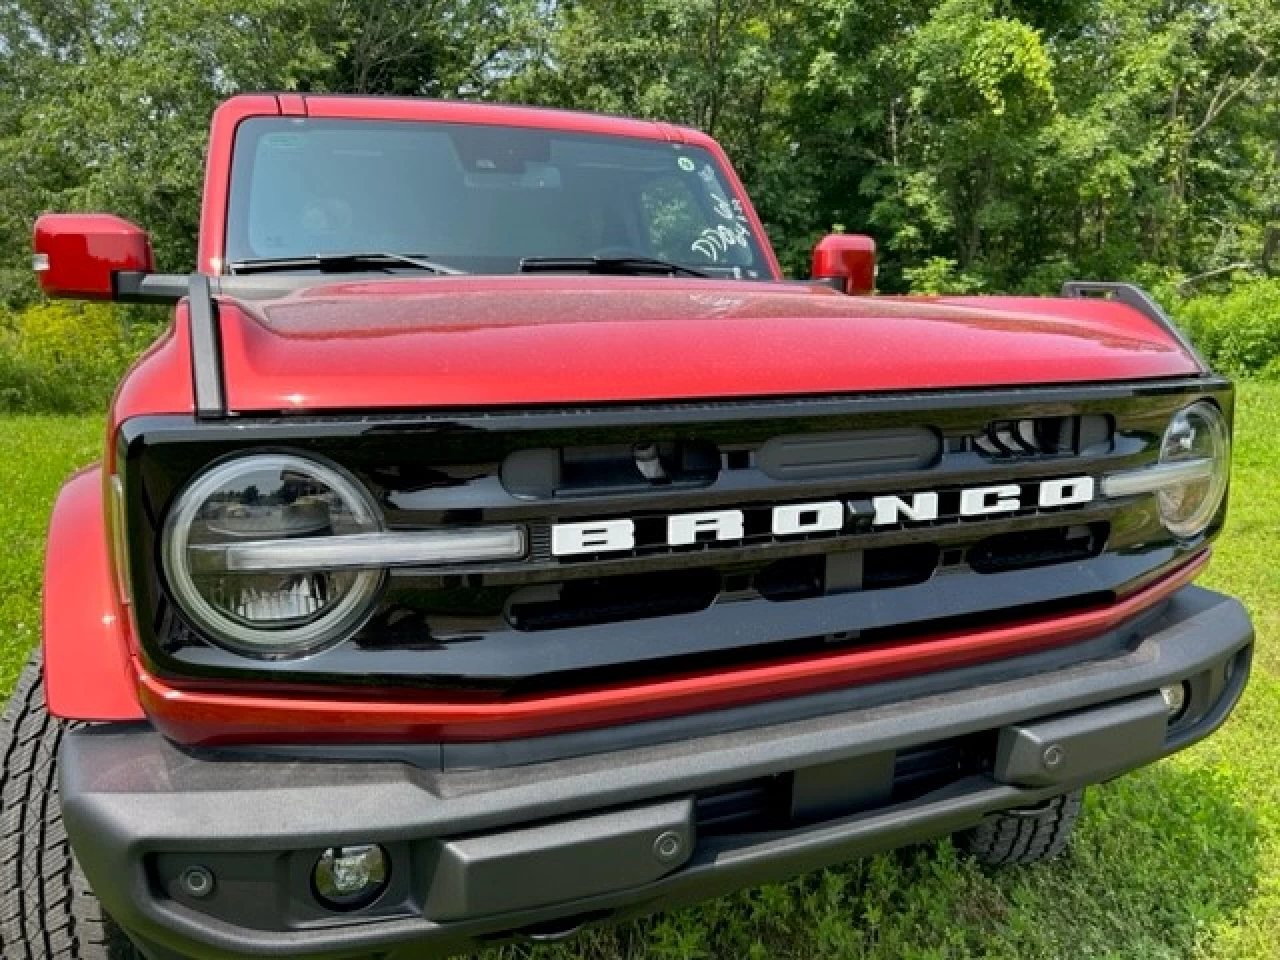 2023 Ford Bronco Outer Banks Image principale